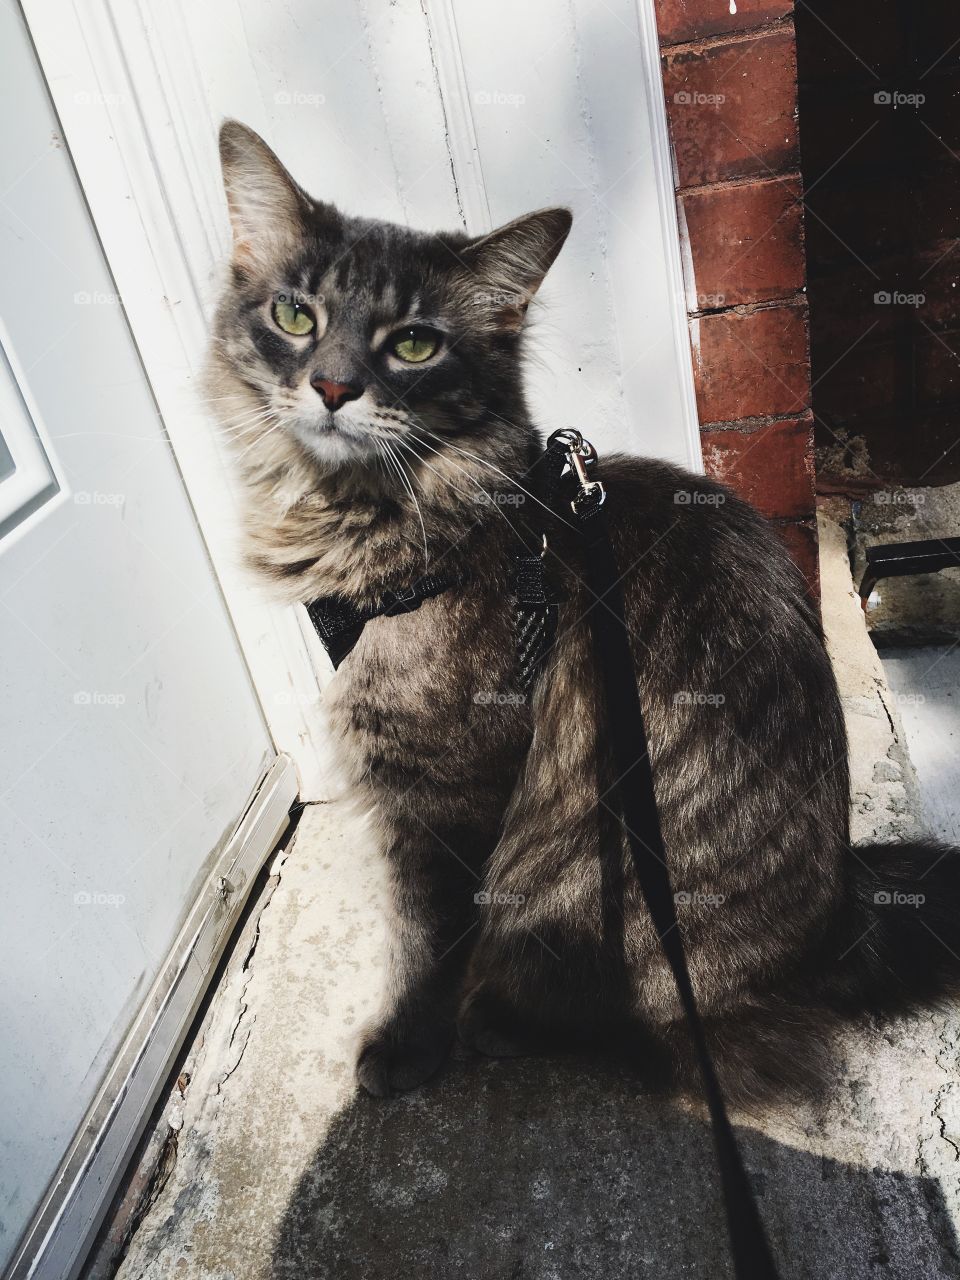 Cat on leash